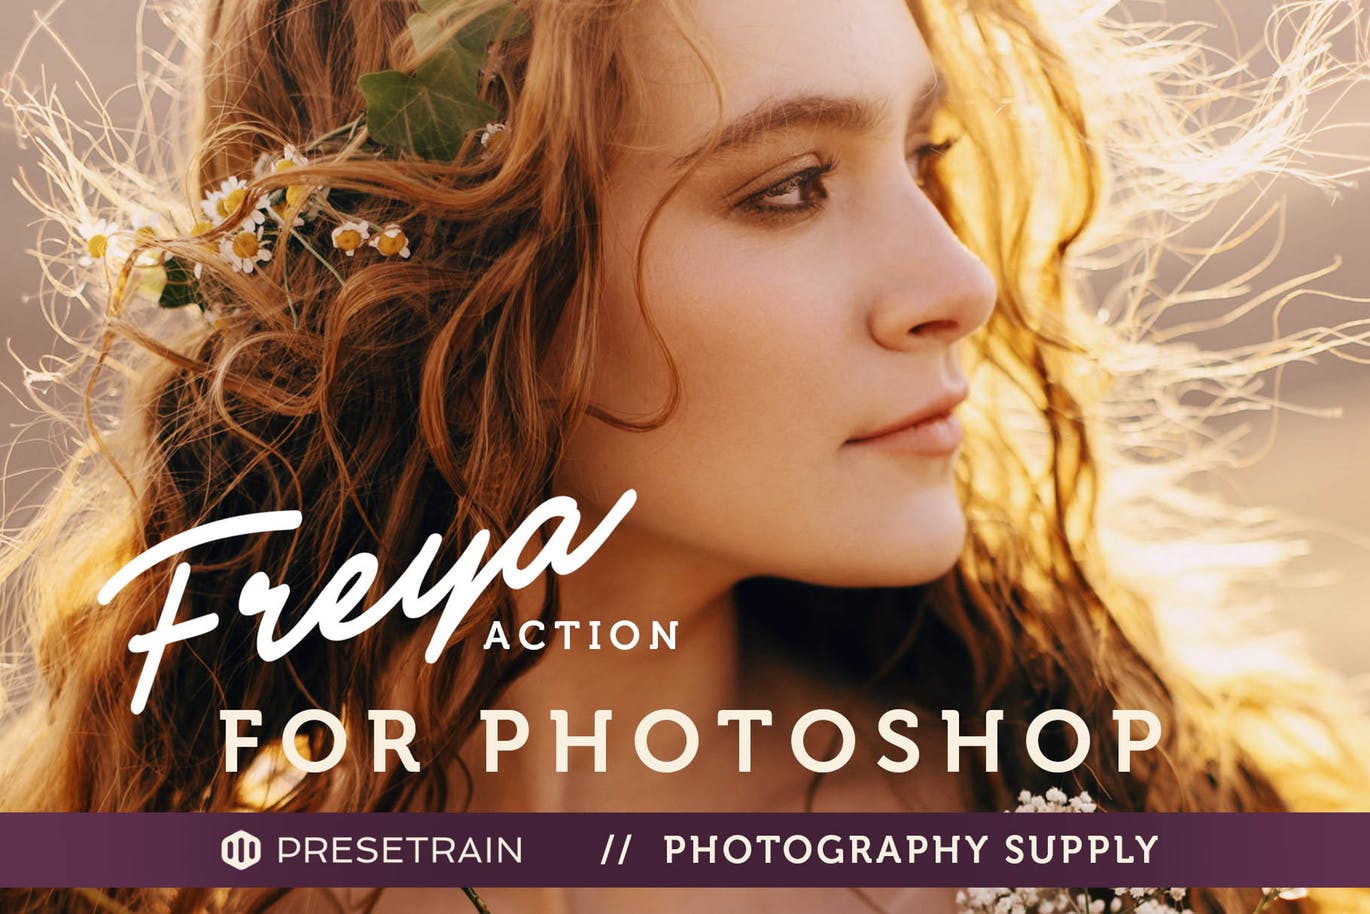 无损色调&柔和哑光效果肖像照片修图PS美颜动作 Freya Portrait Action for Photoshop插图(8)